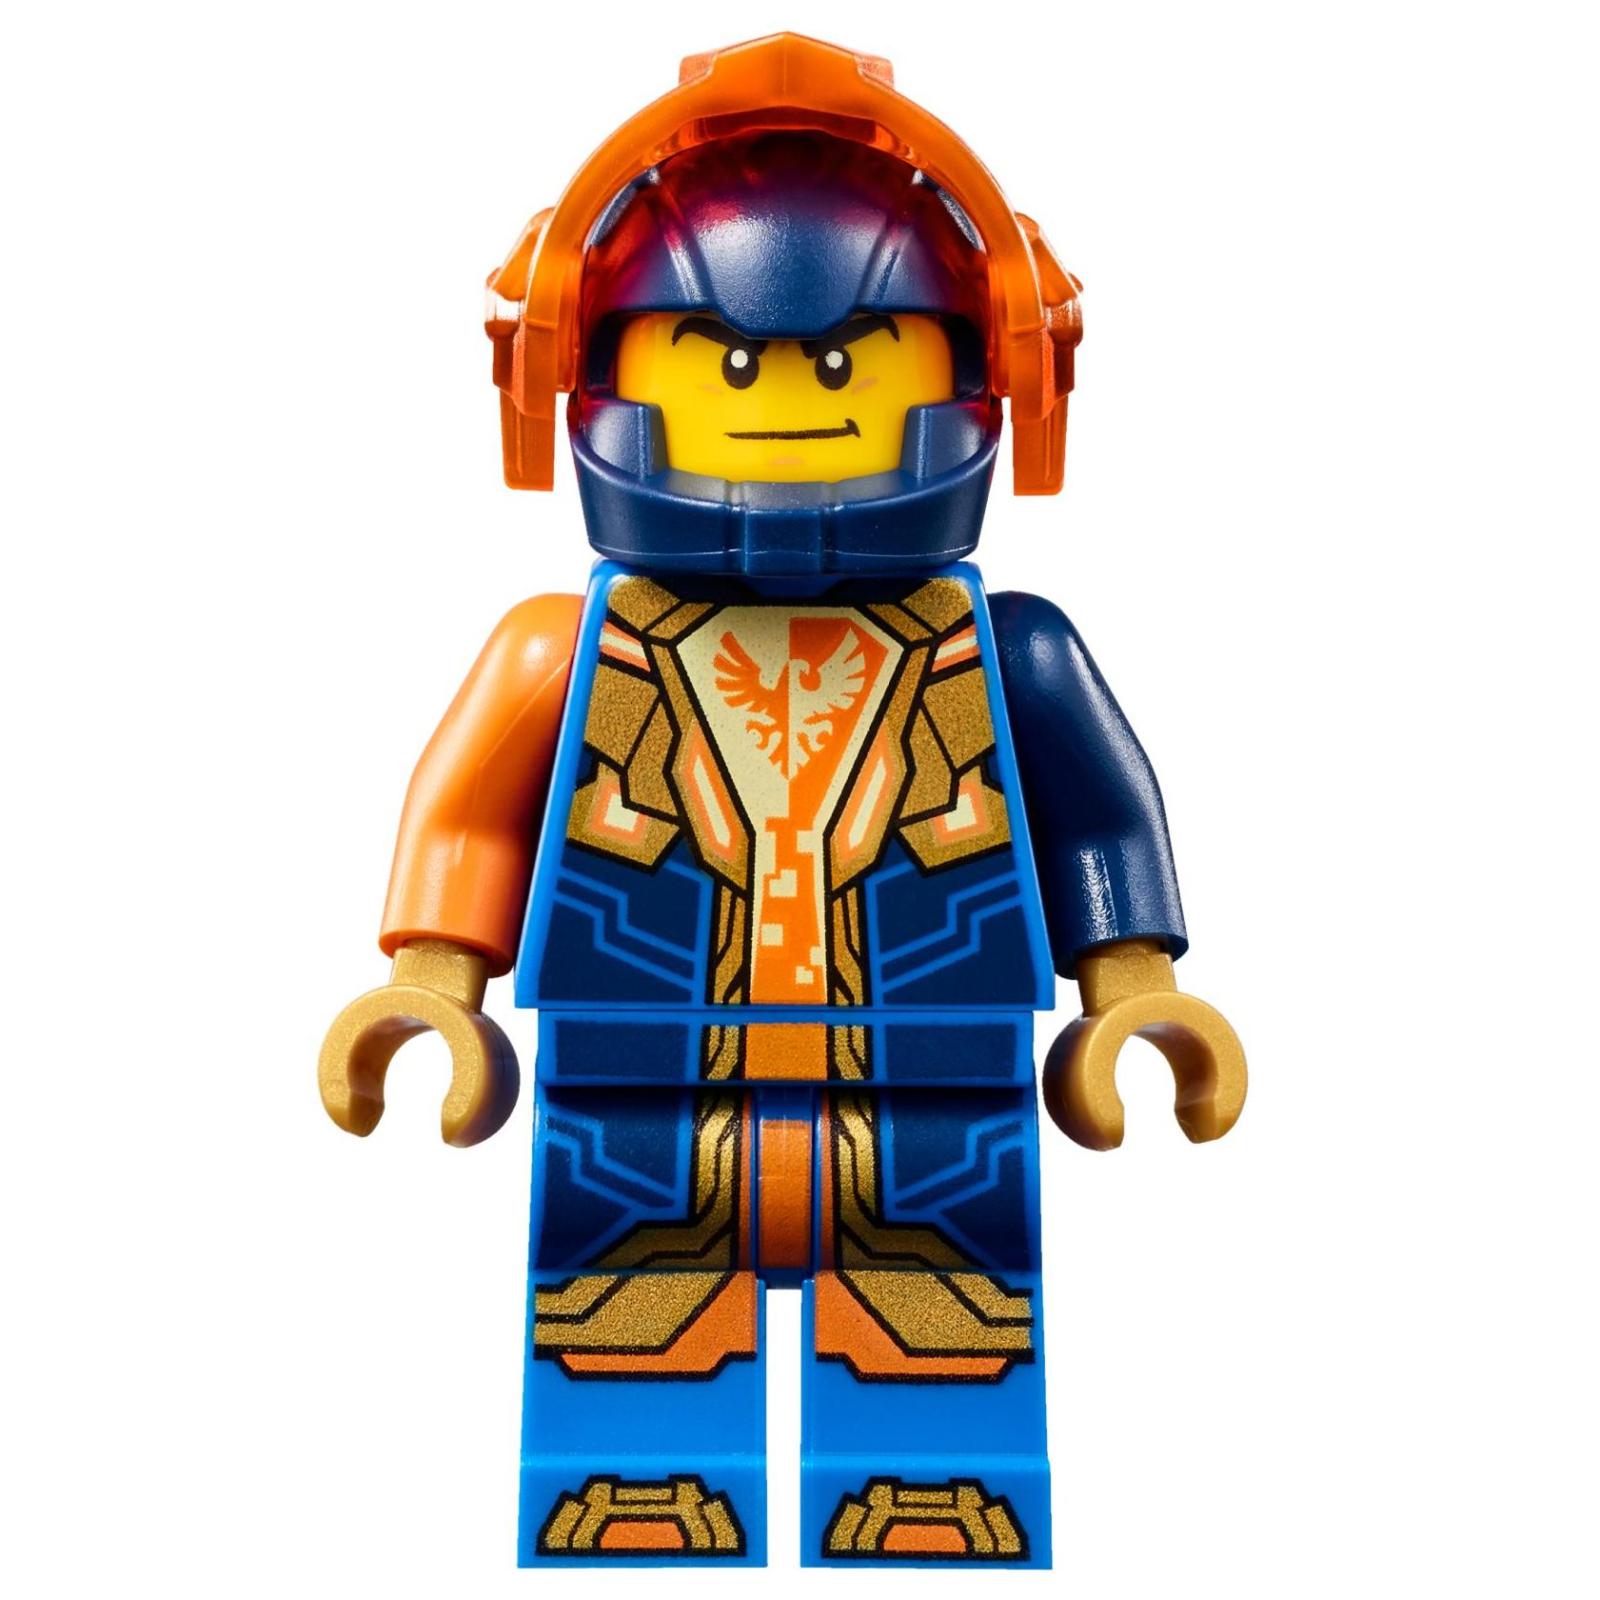 Конструктор LEGO Nexo Knights Бой техномагов (72004) зображення 9